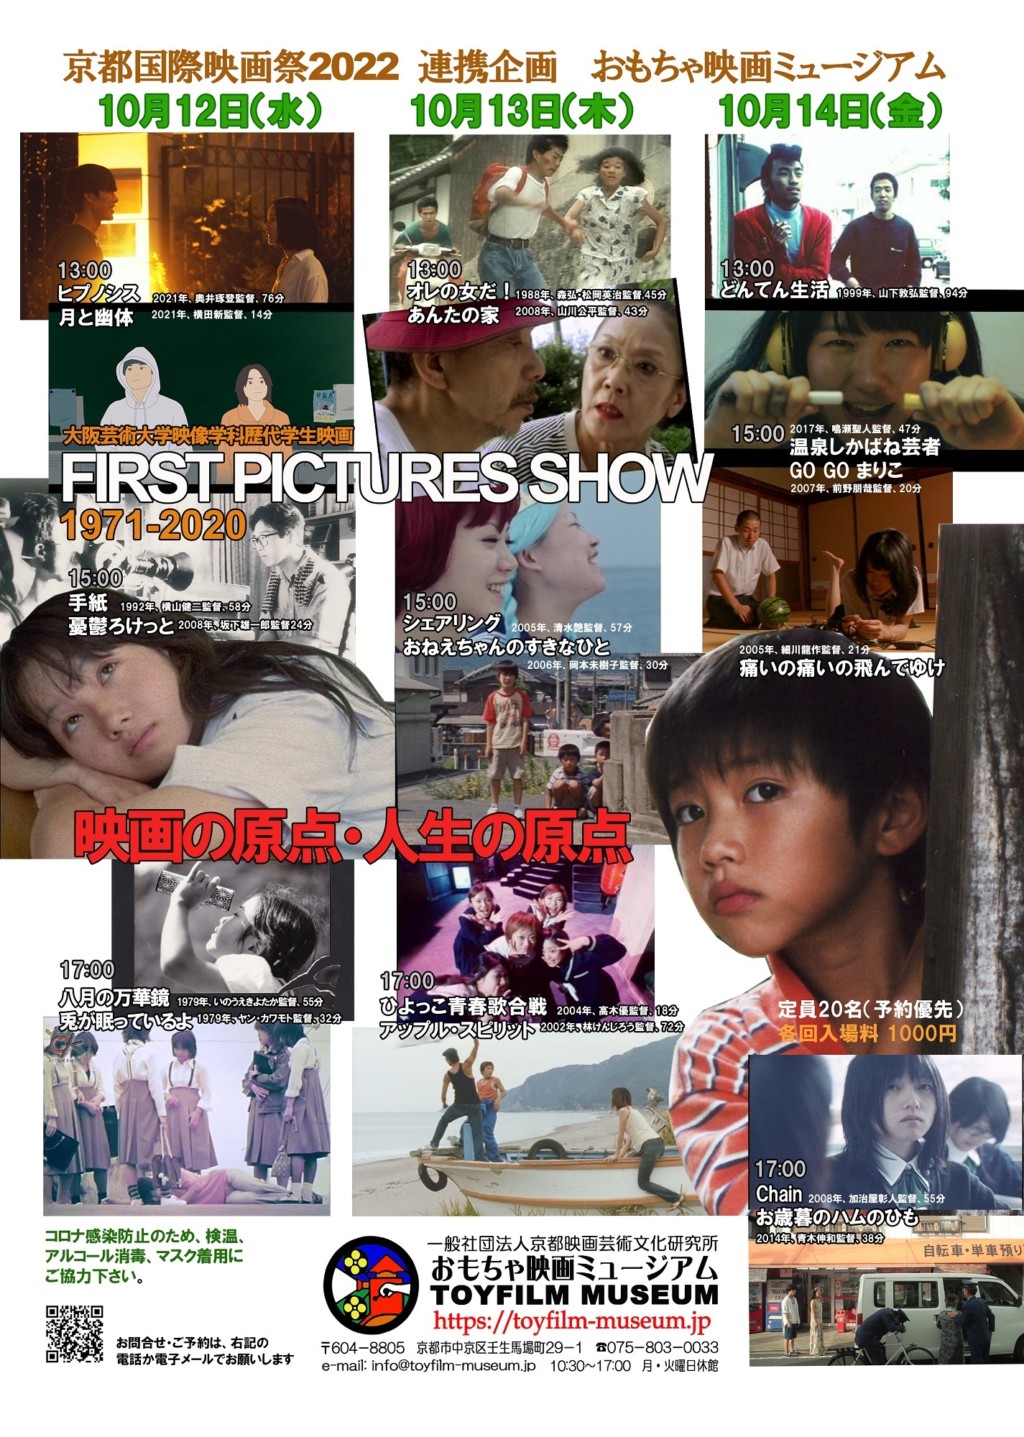 京都国際映画祭連携企画として、大阪芸大映像学科歴代学生映画「FIRST PICTURES SHOW1971-2020」を開催‼